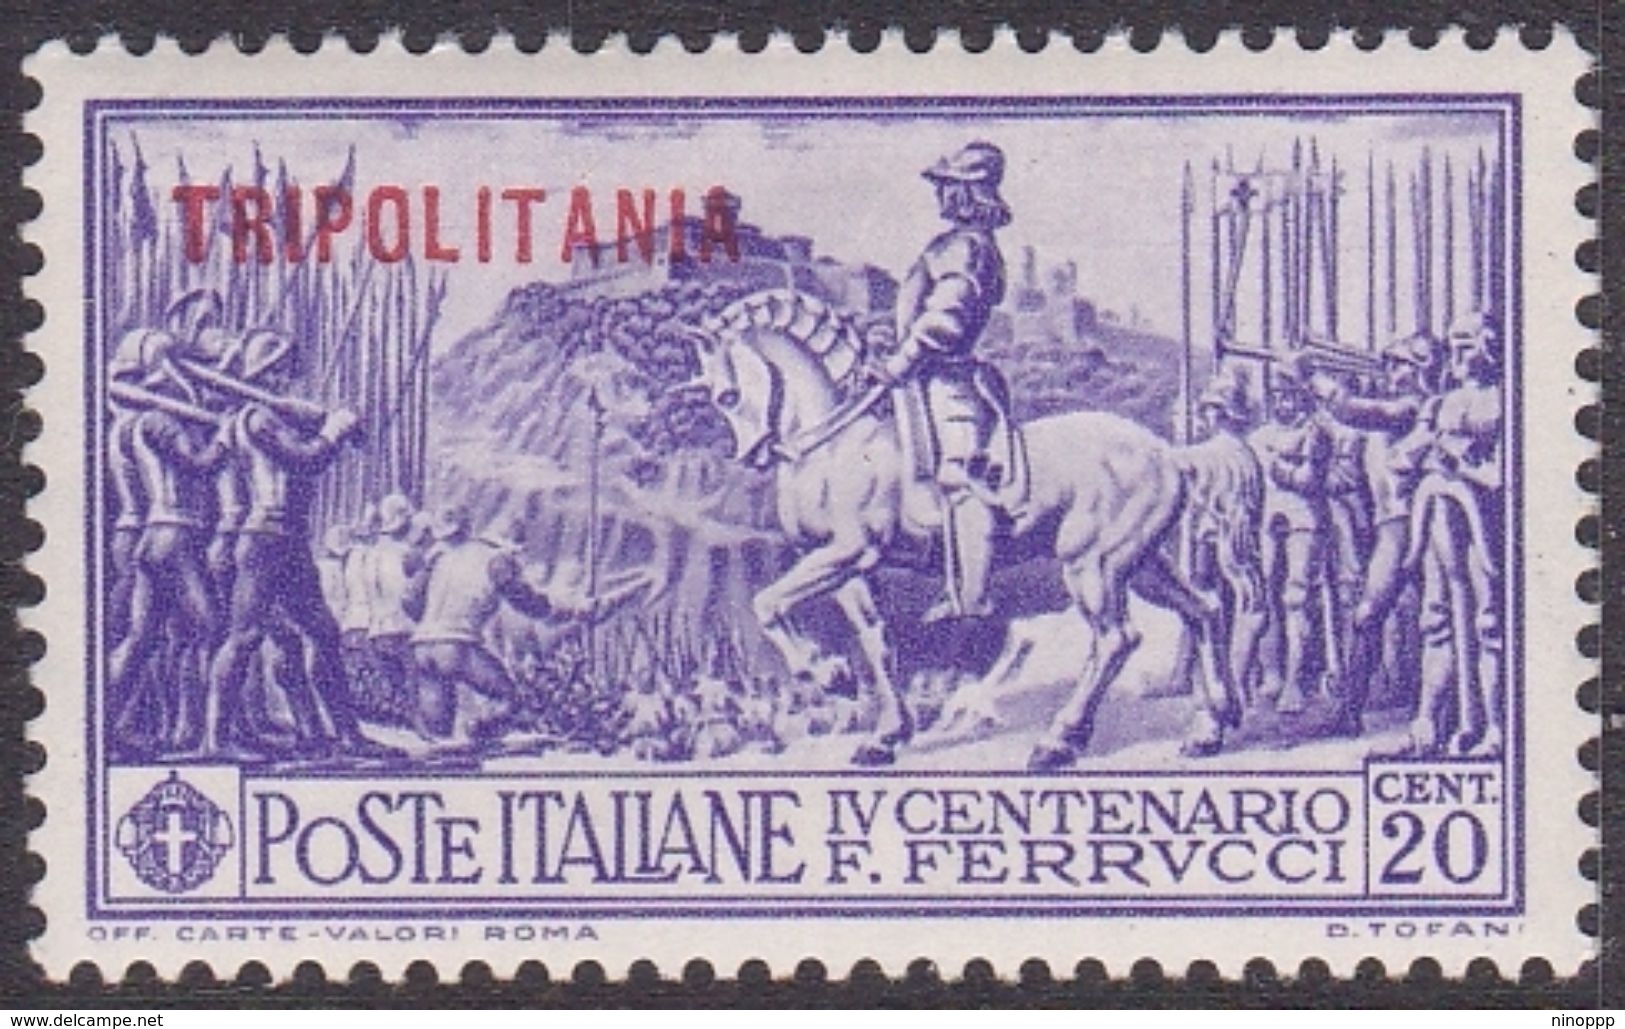 Italy-Colonies And Territories-Tripolitania S64 1930 Ferrucci,20c Violet,used - Tripolitania